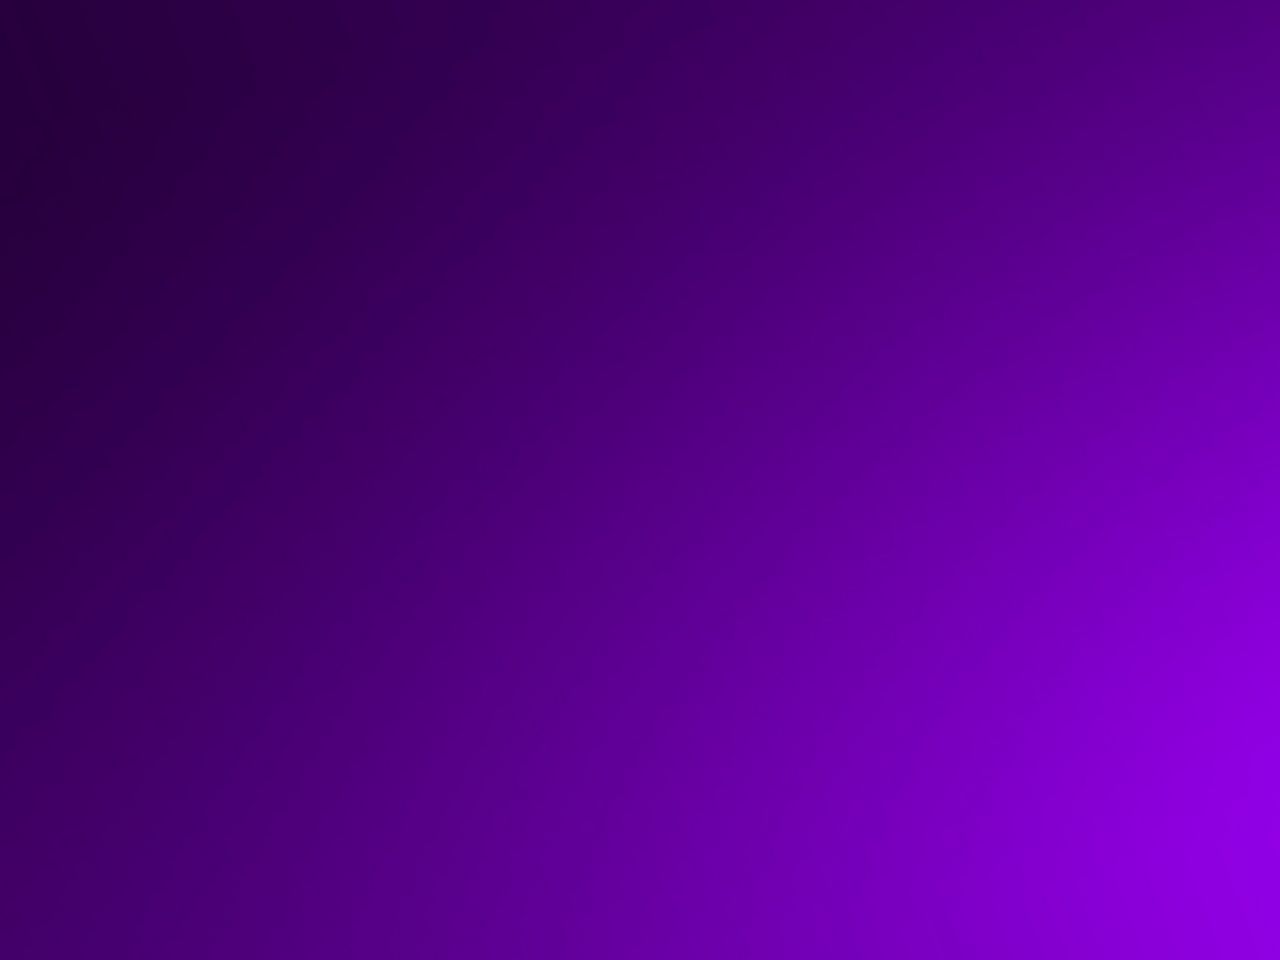 Download wallpaper 1280x960 background, solid, purple standard 4:3 HD background